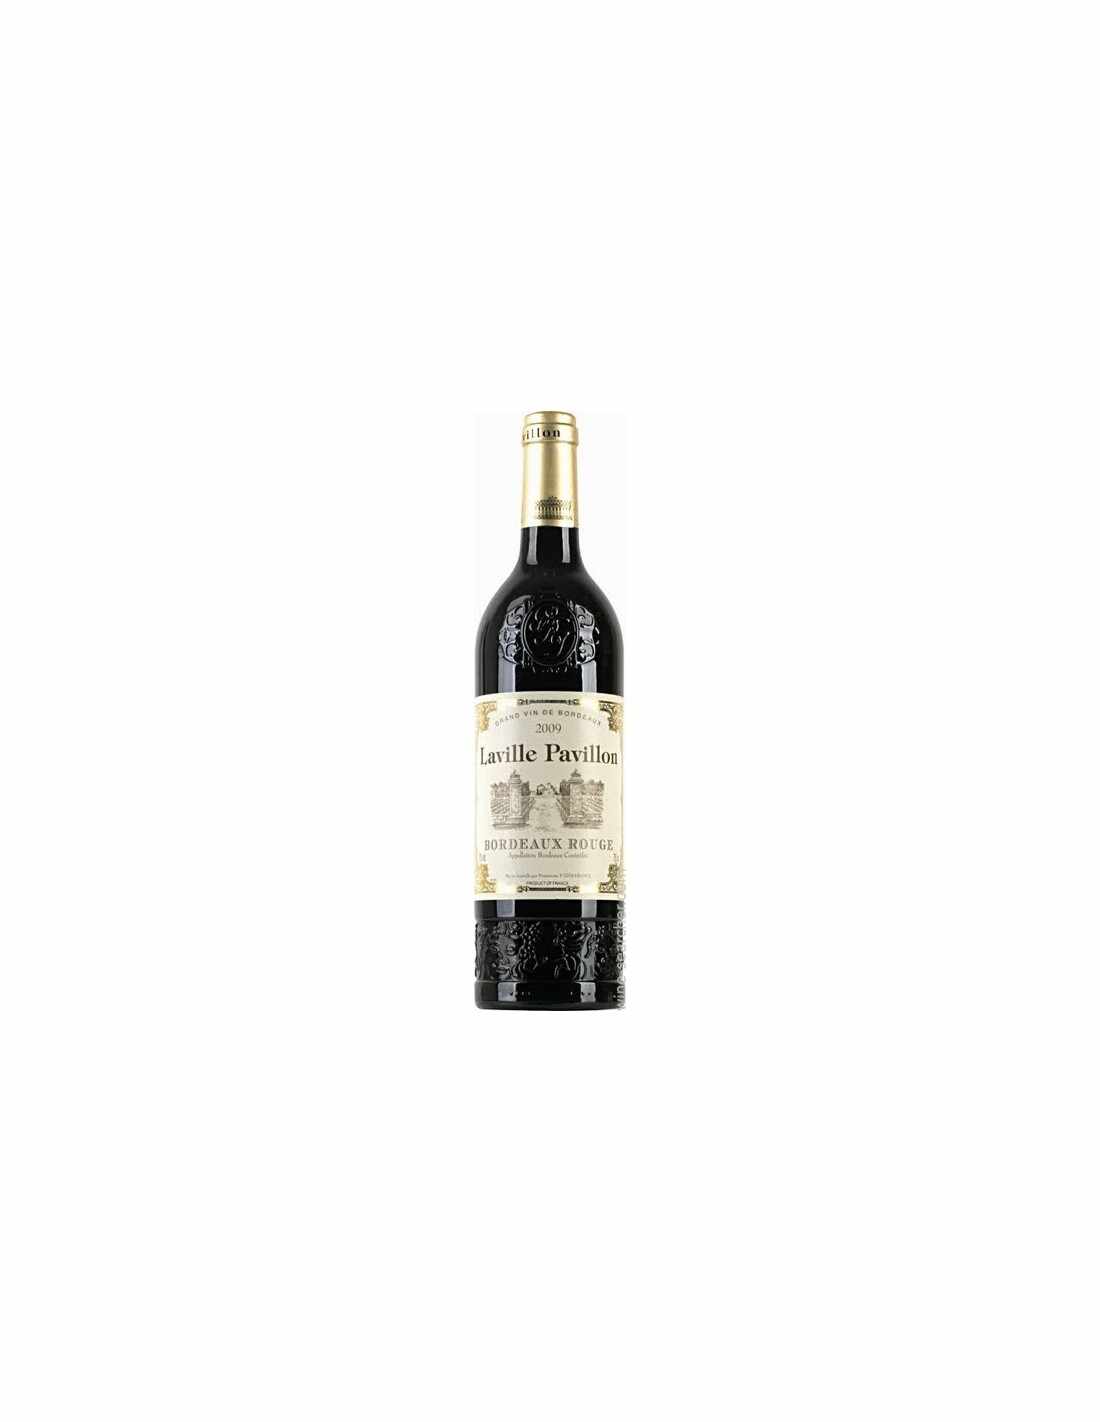 Vin rosu, Cupaj, Laville Pavillon Bordeaux, 0.75L, 13% alc., Franta